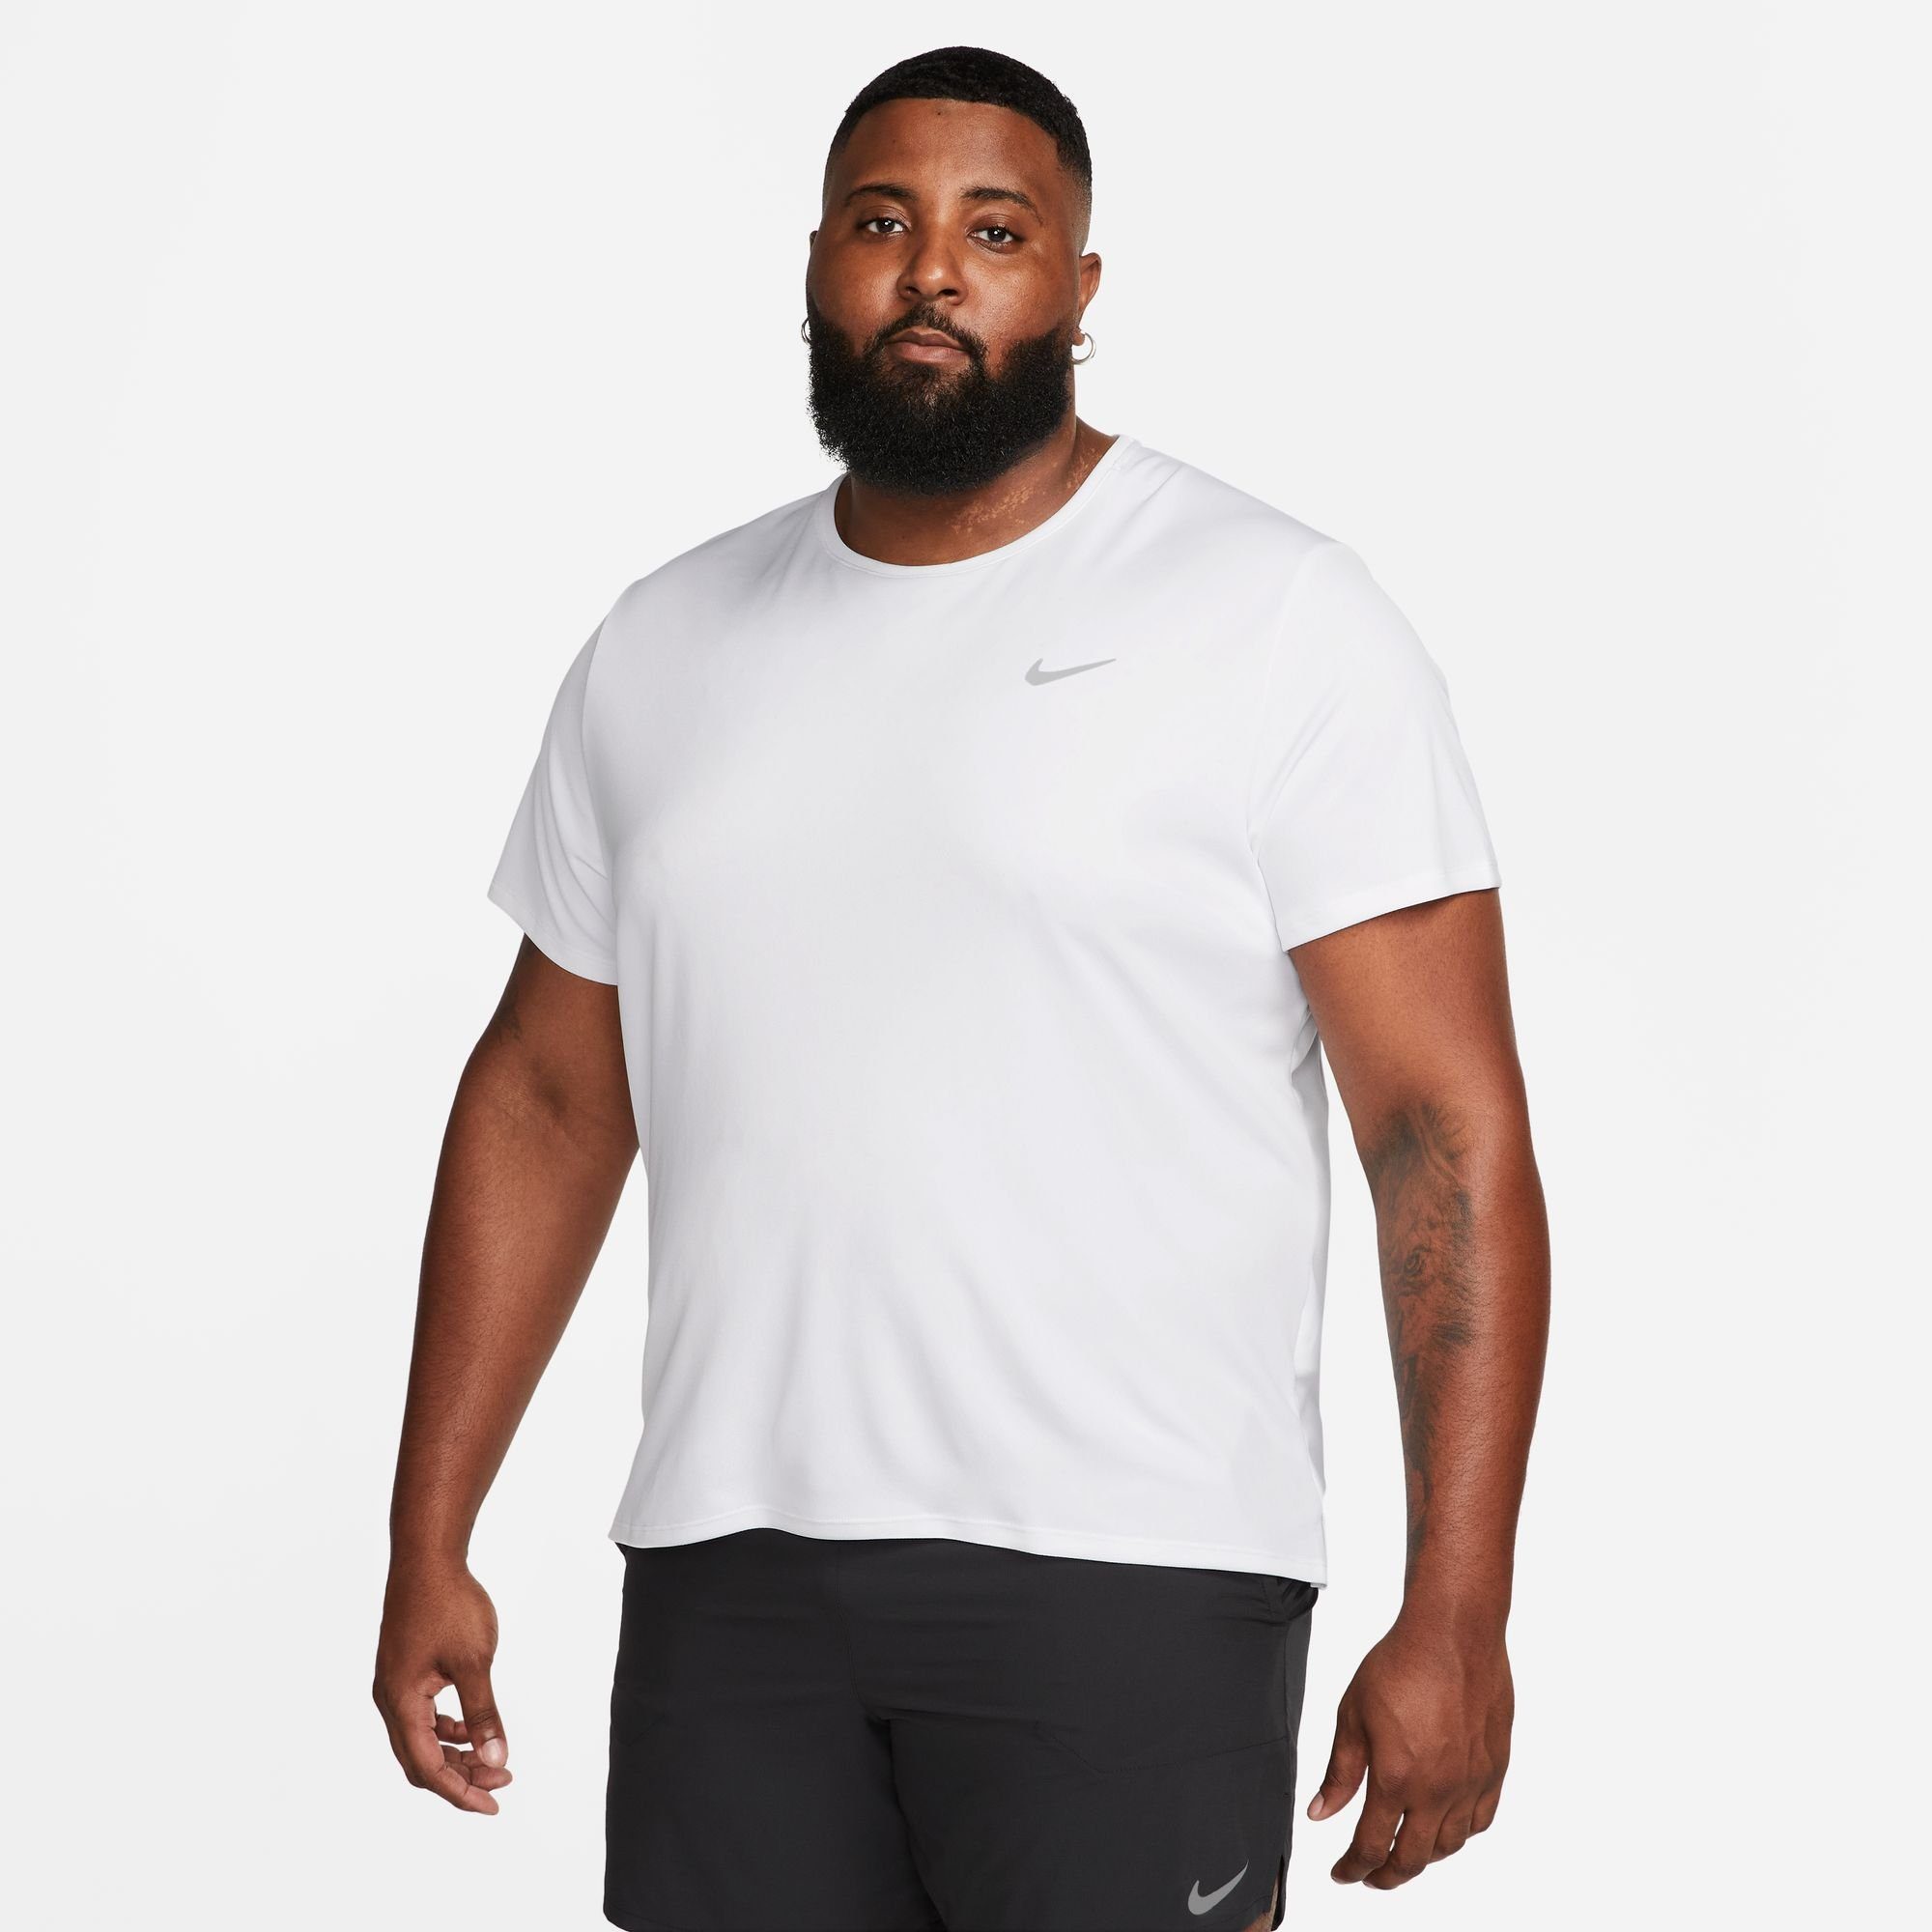 MEN'S WHITE/REFLECTIVE MILER Nike RUNNING TOP UV Laufshirt DRI-FIT SHORT-SLEEVE SILV